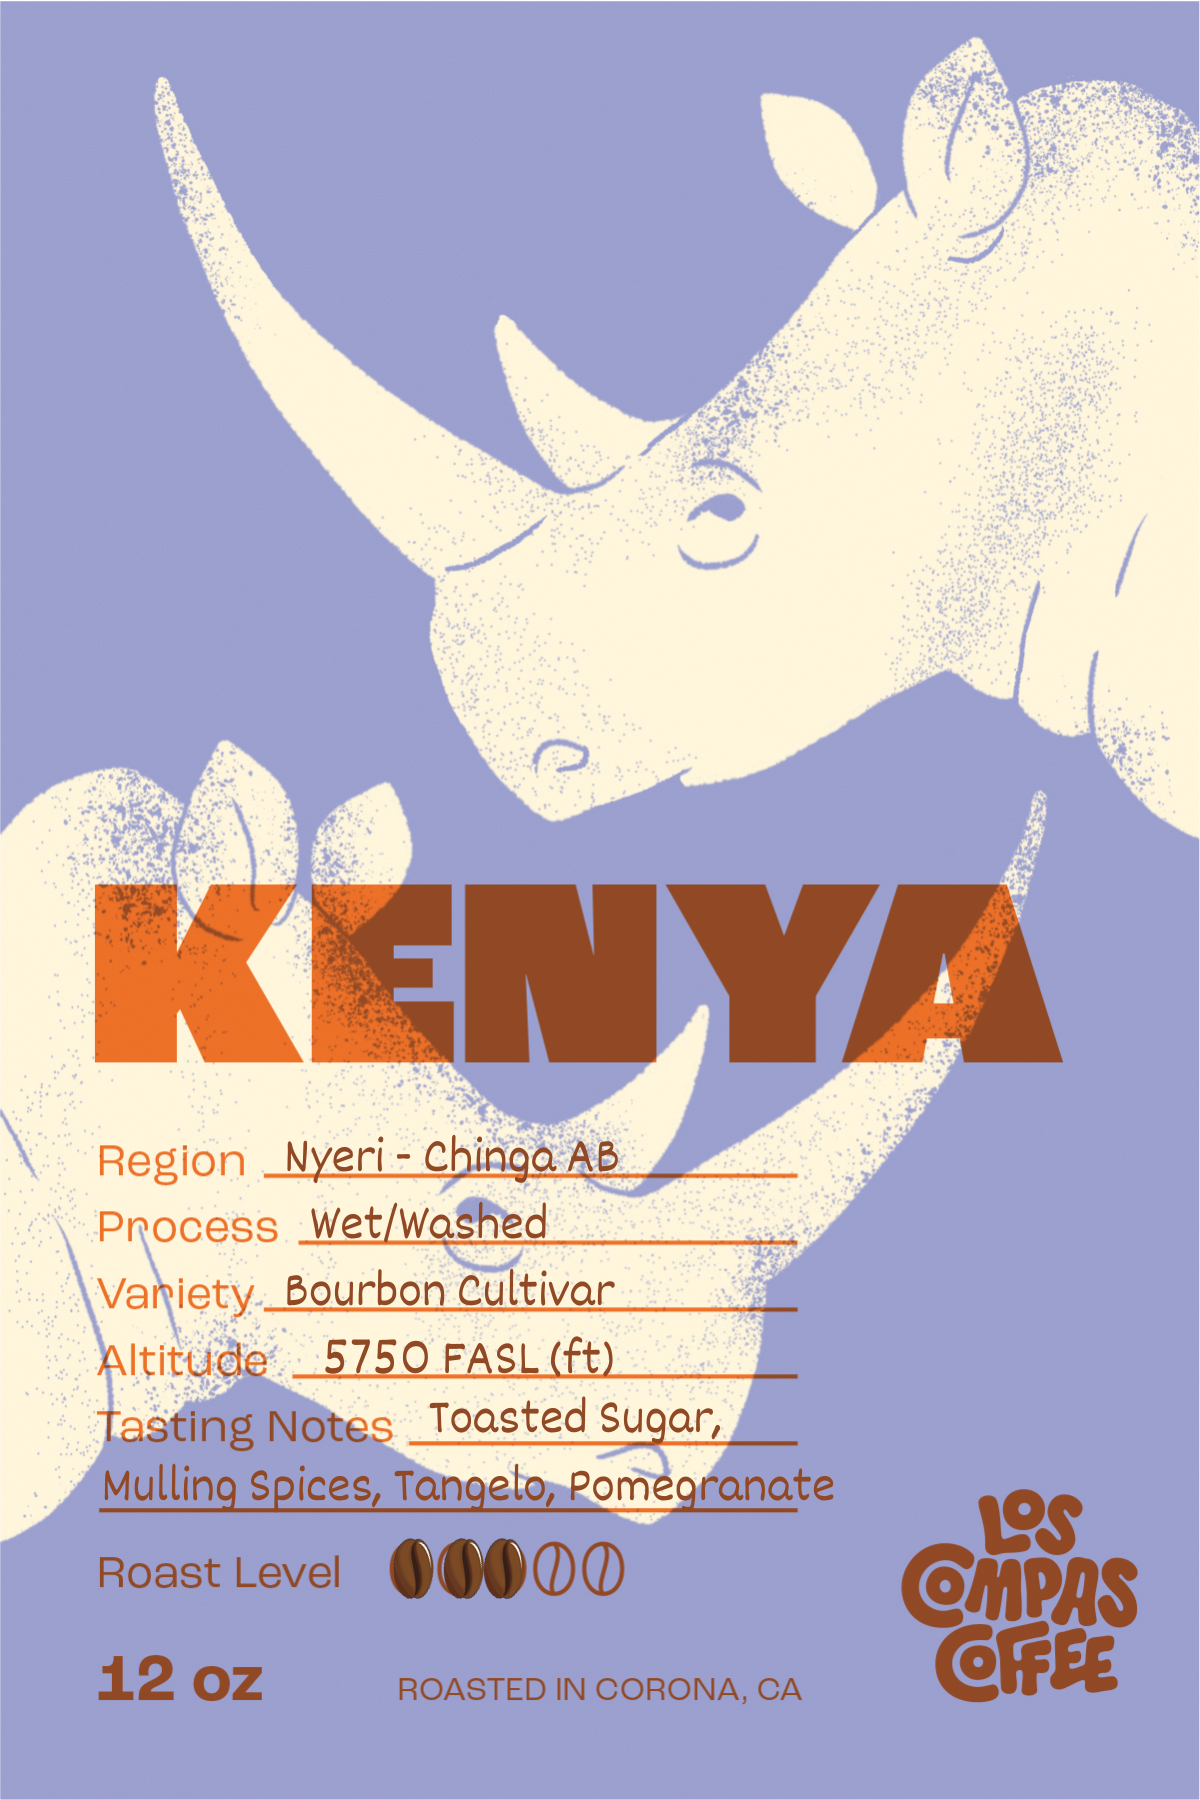 Image of Label for Kenya Nyeri Chinga AB Coffee.